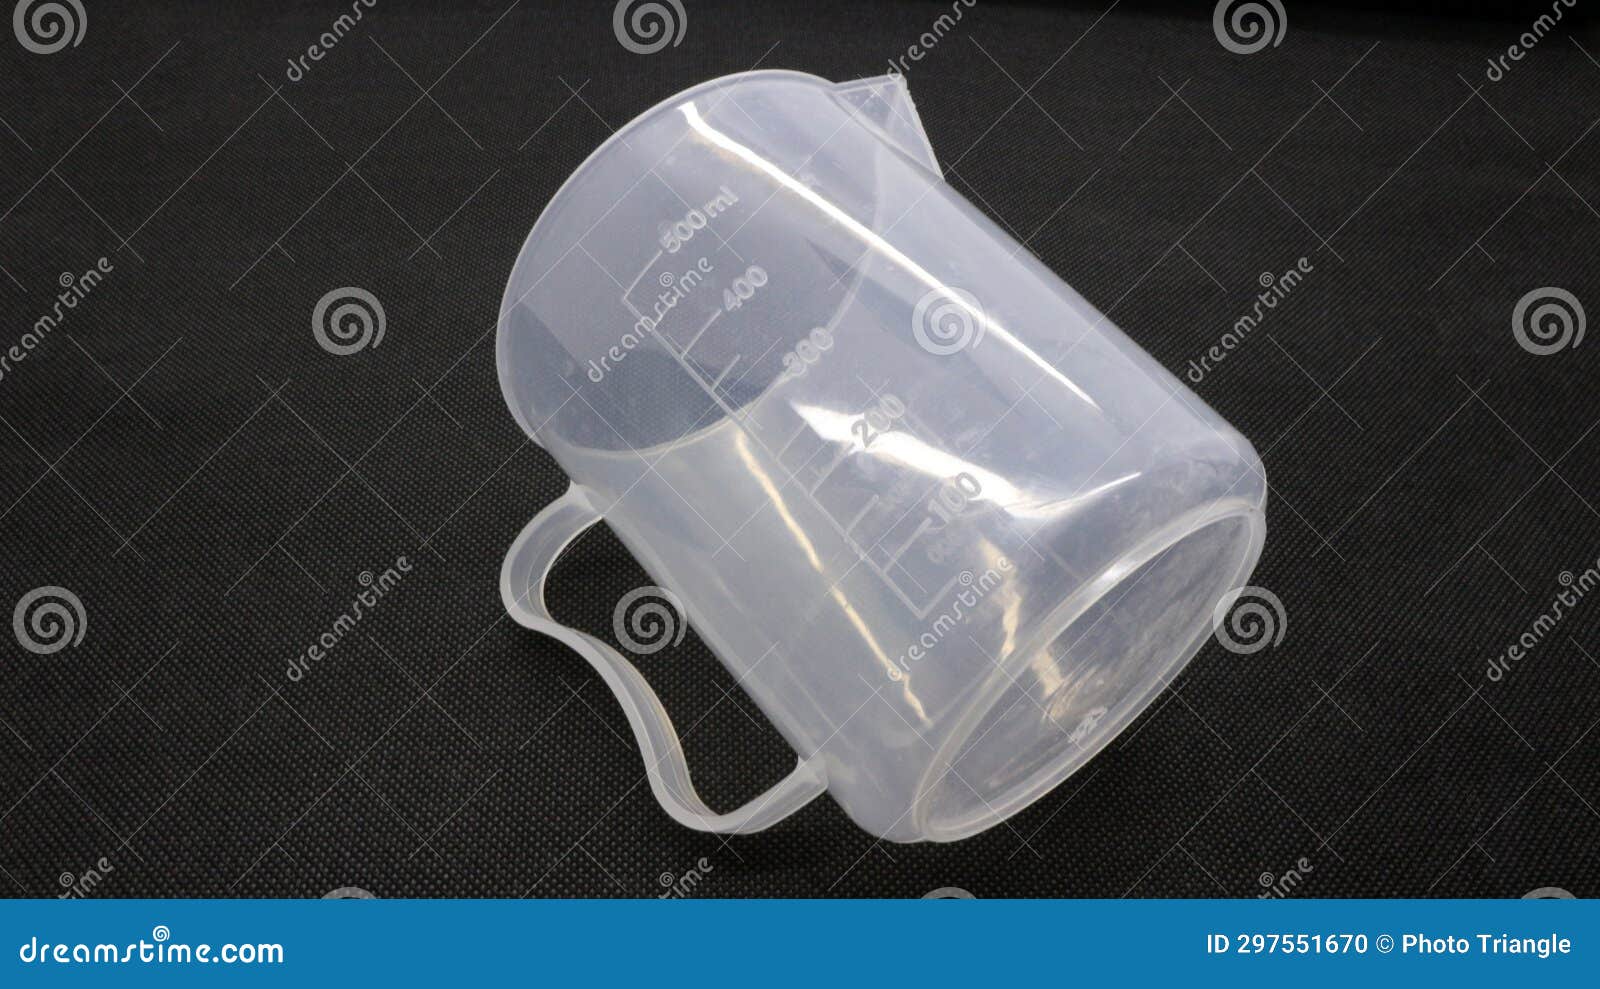 https://thumbs.dreamstime.com/z/transparent-graduated-beaker-handle-measuring-jug-clear-white-plastic-cup-297551670.jpg